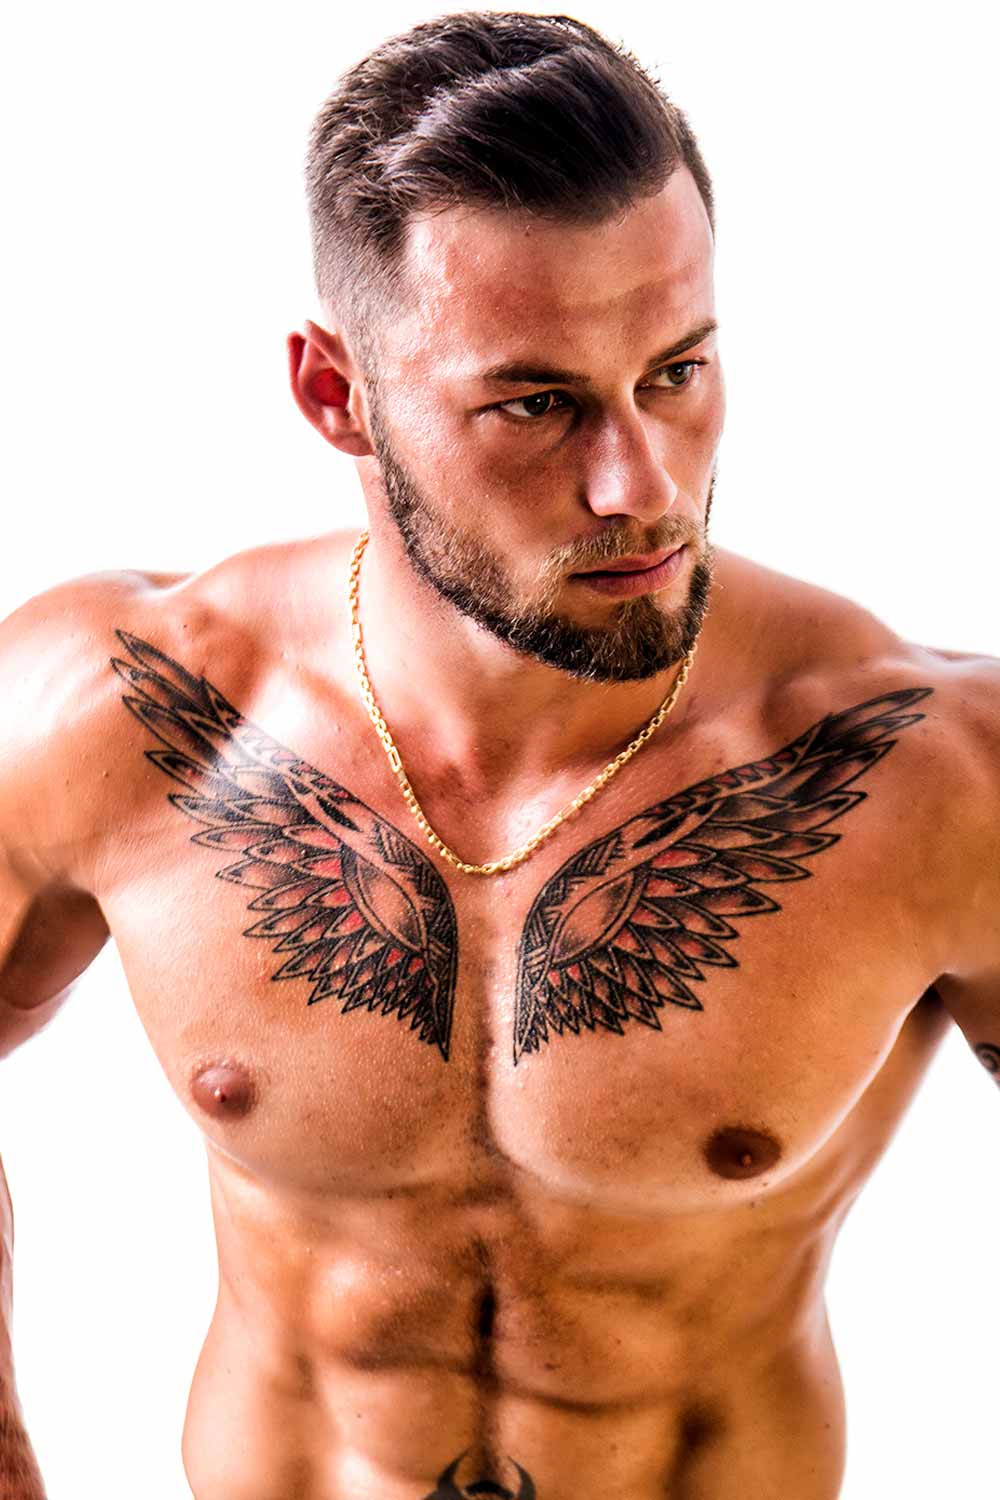 40+ Unique Forearm Tattoos for Men